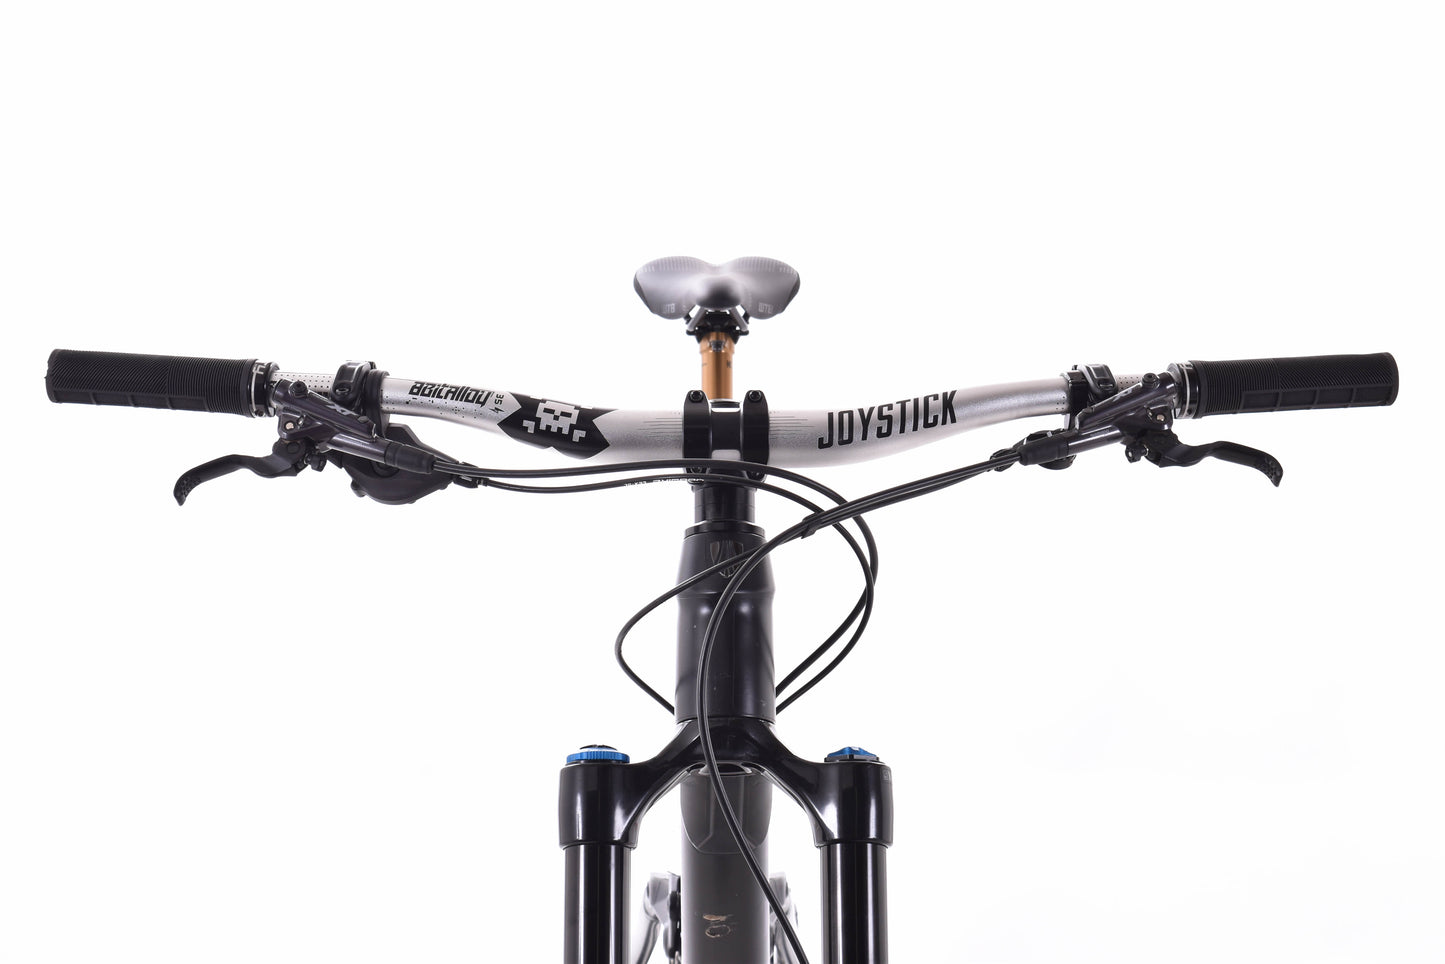 USED 2019 Trek Slash 8 Mountain Bike Large 19.5" Shimano XT Chris King Fox 38